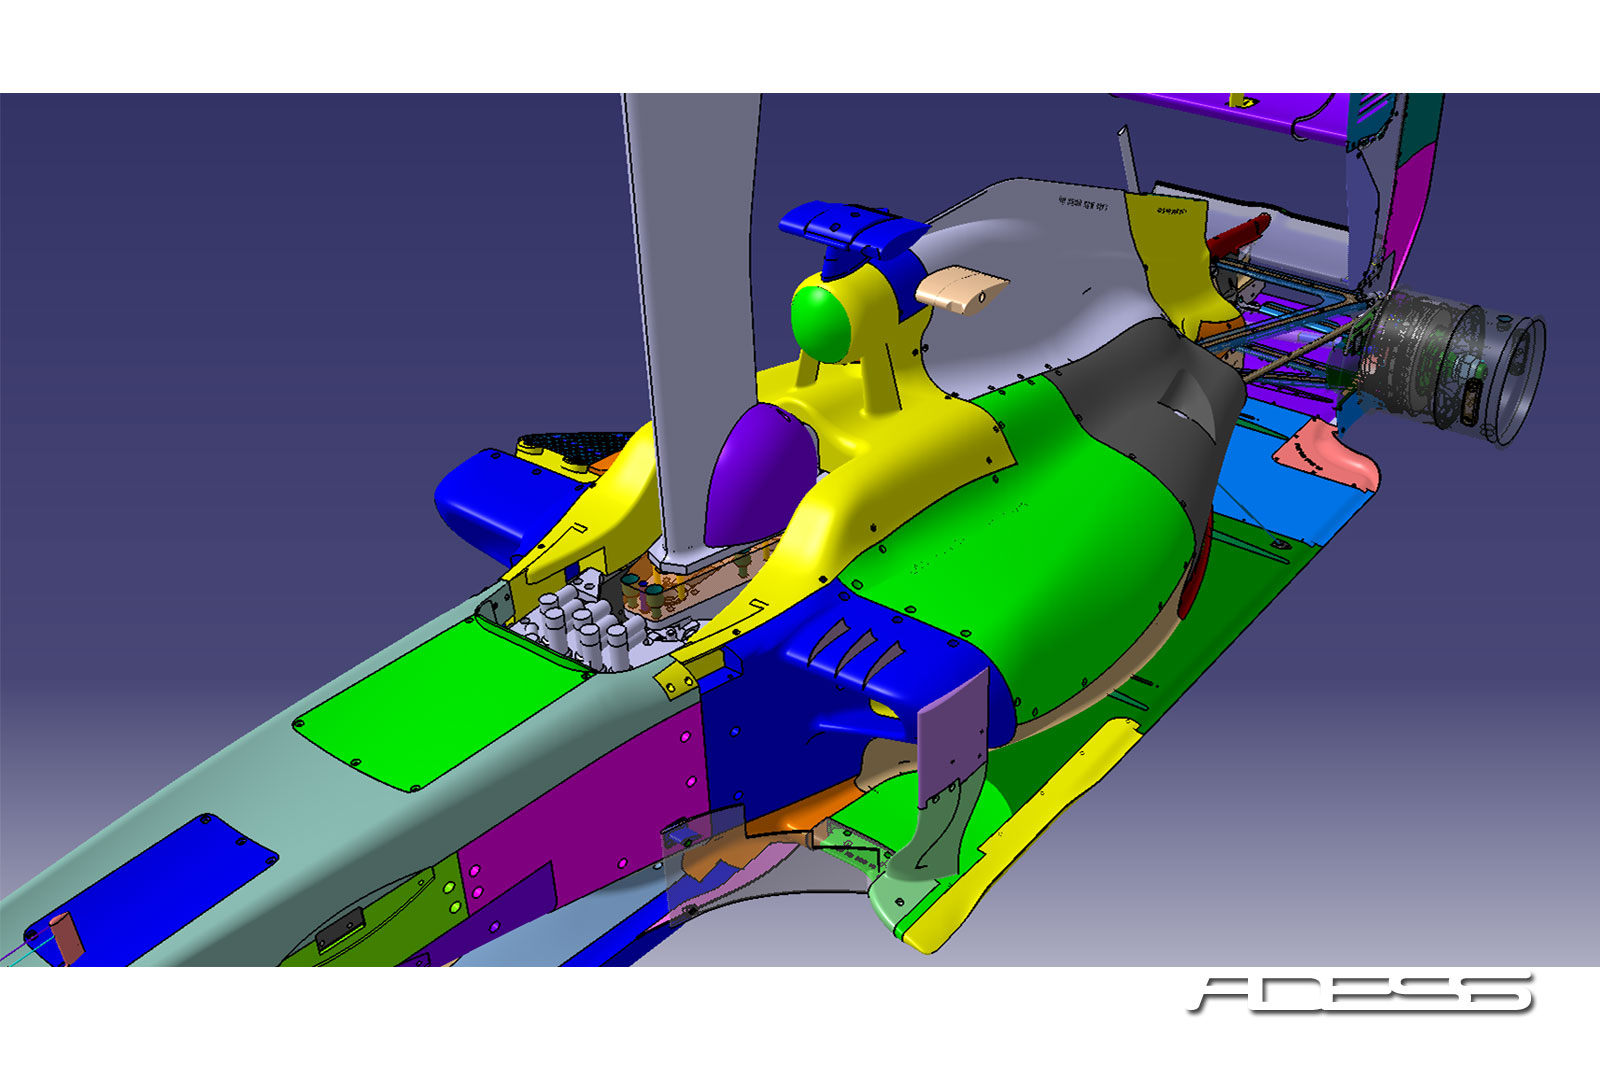 F1 wind tunnel model close-up